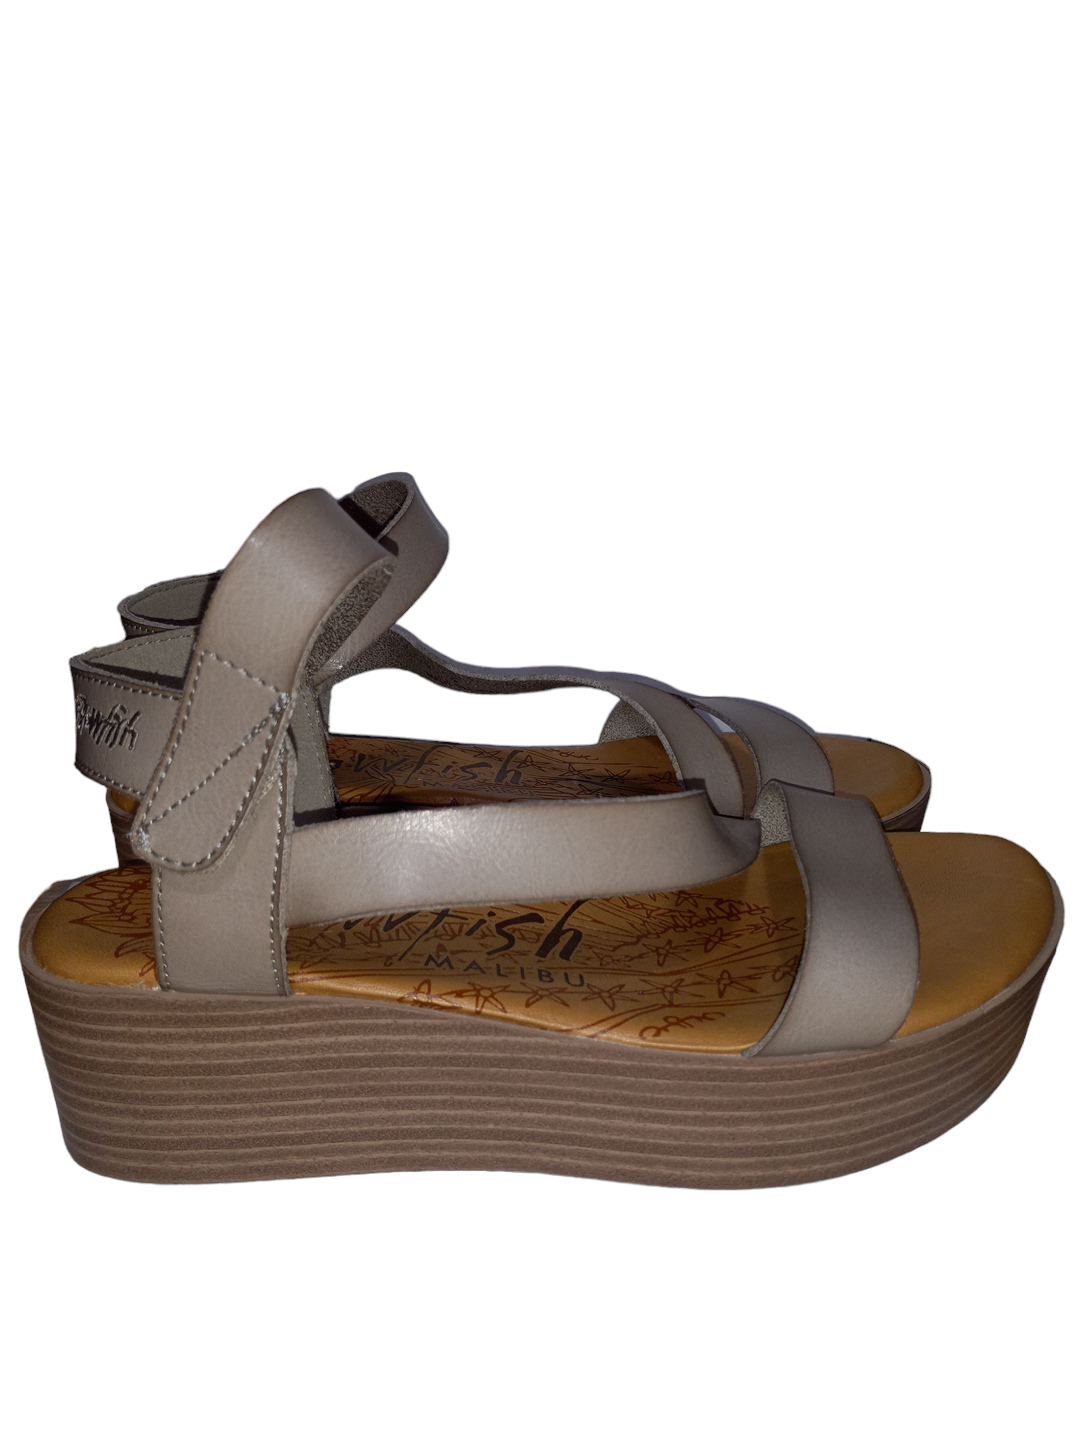 Grey Sandals Heels Platform Blowfish, Size 9